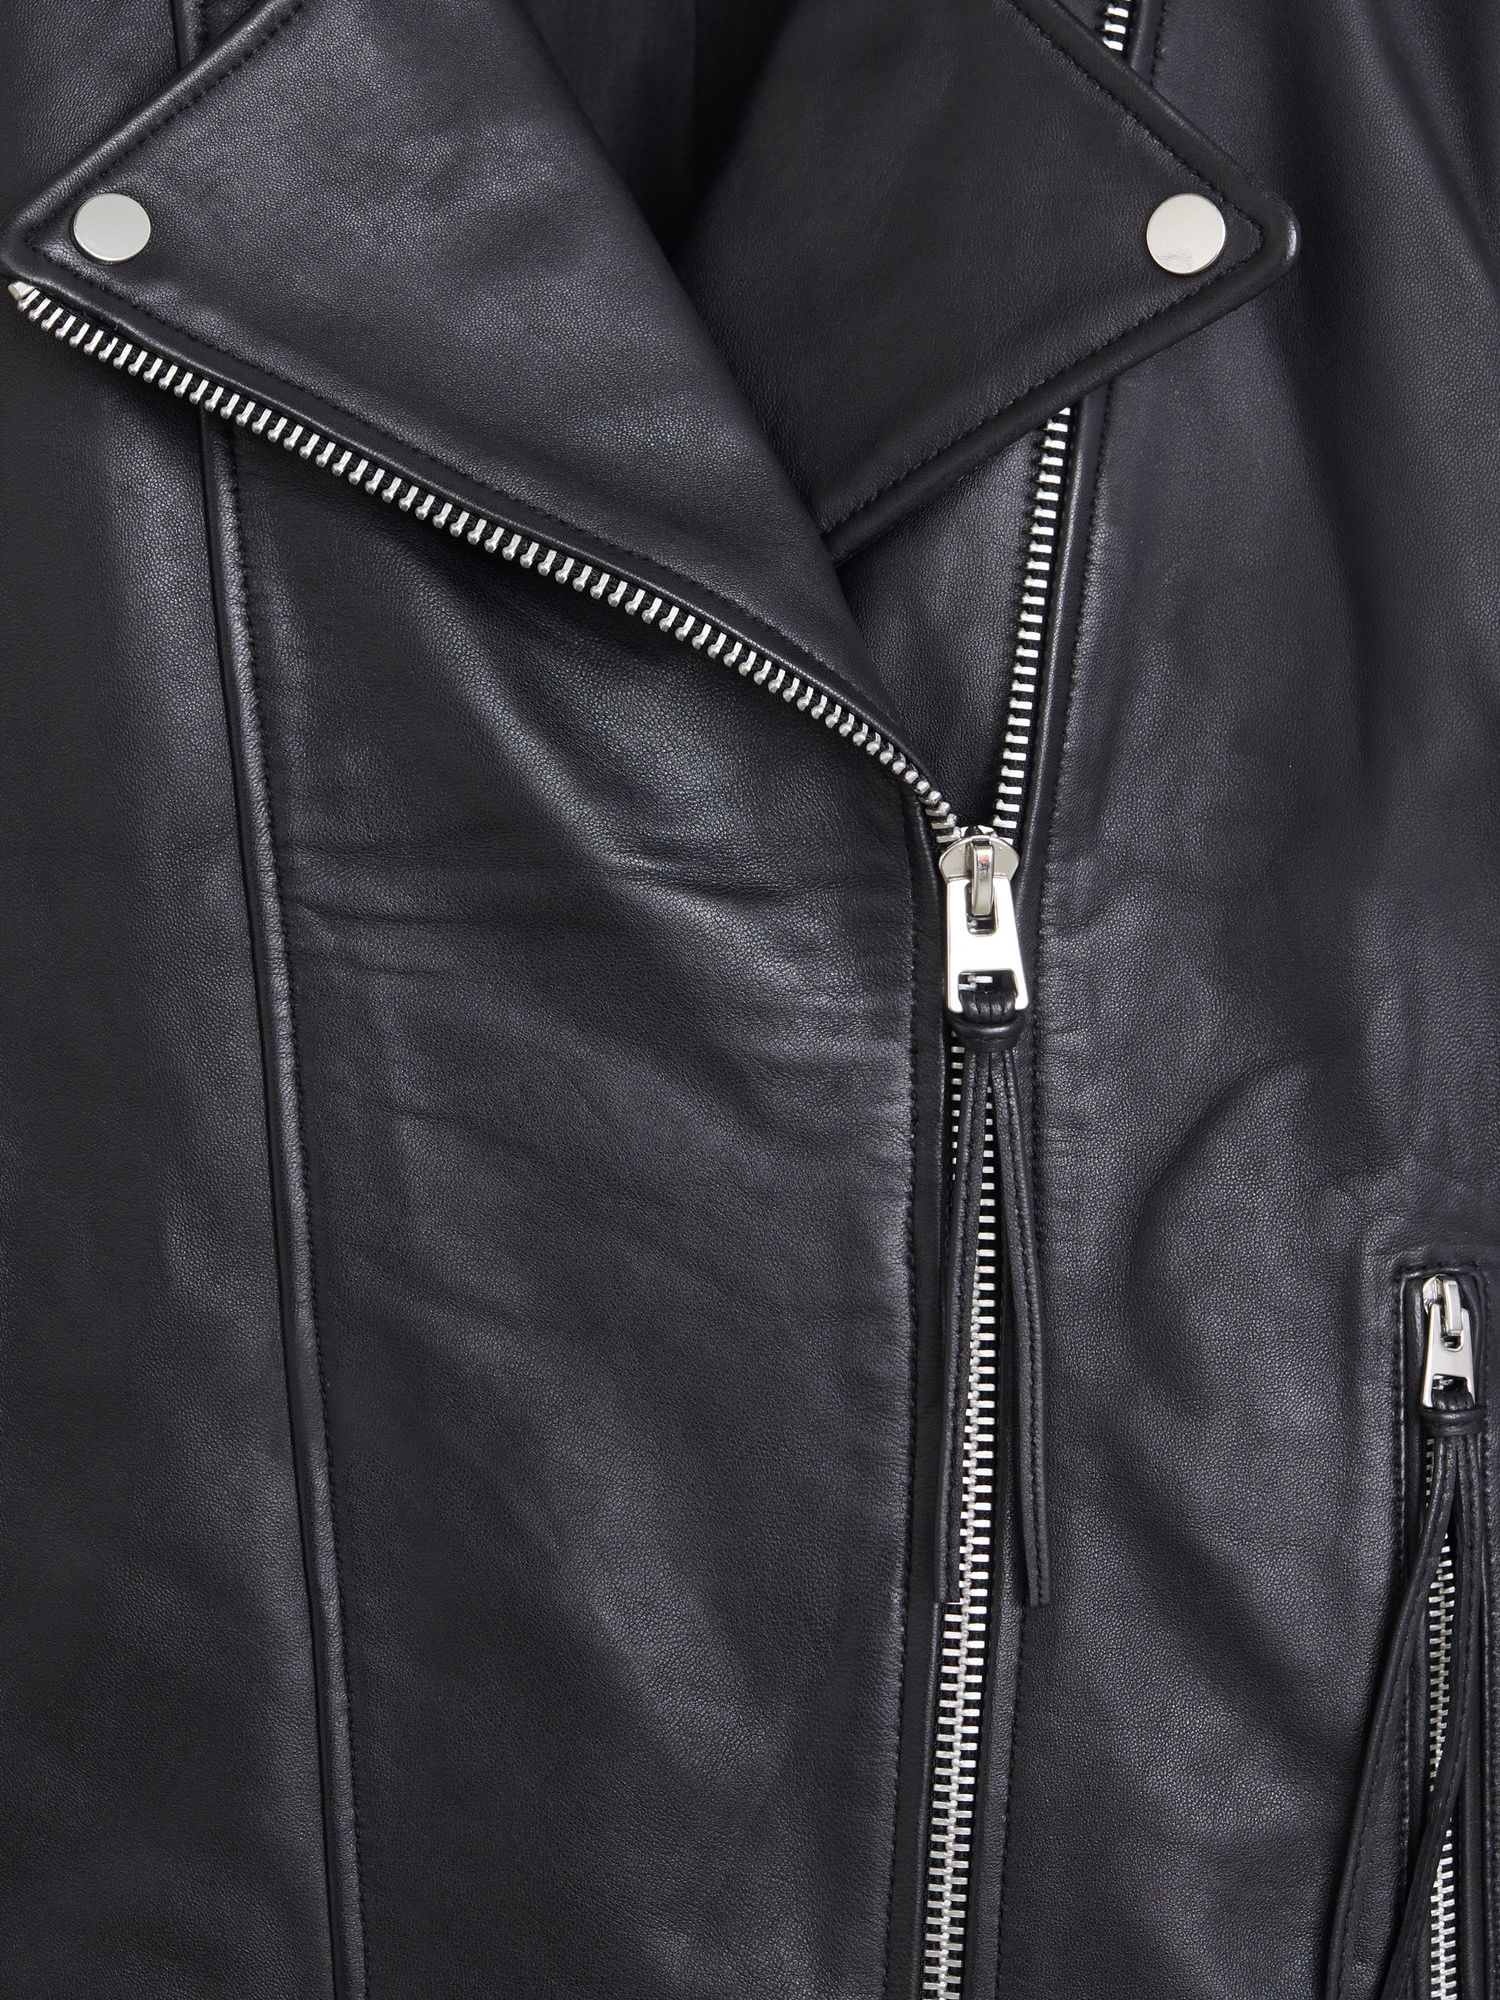 Buy Mango Perfect Leather Biker Jacket, Black Online at johnlewis.com